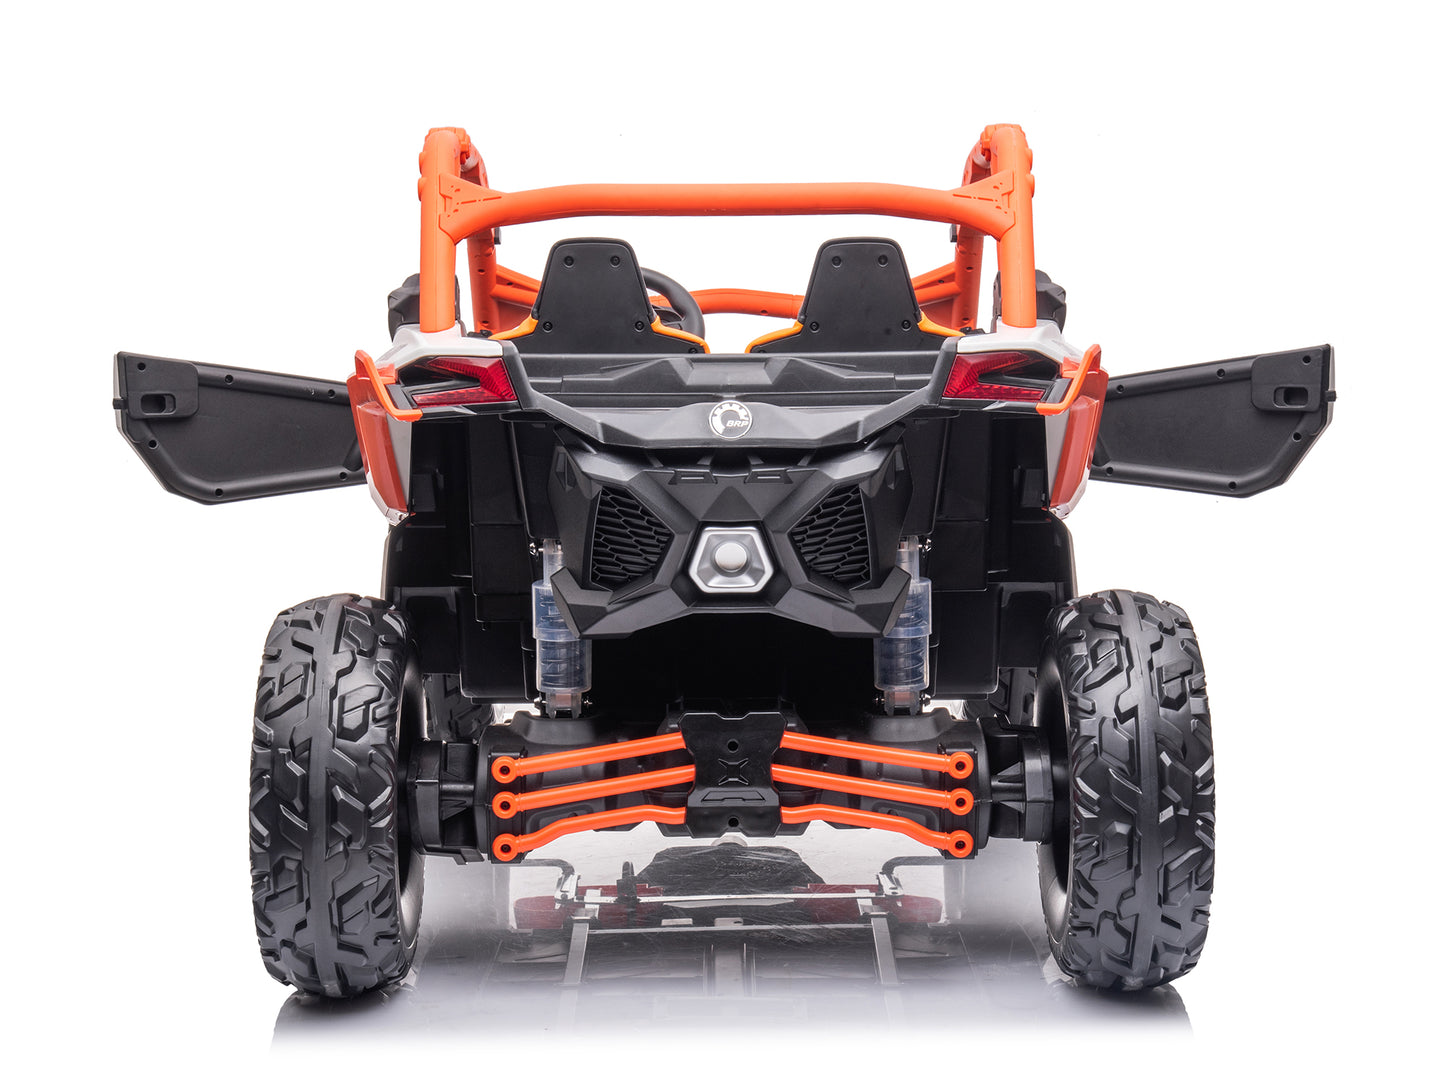 24V Can-Am Maverick X3 Kids Ride-On Buggy - Orange